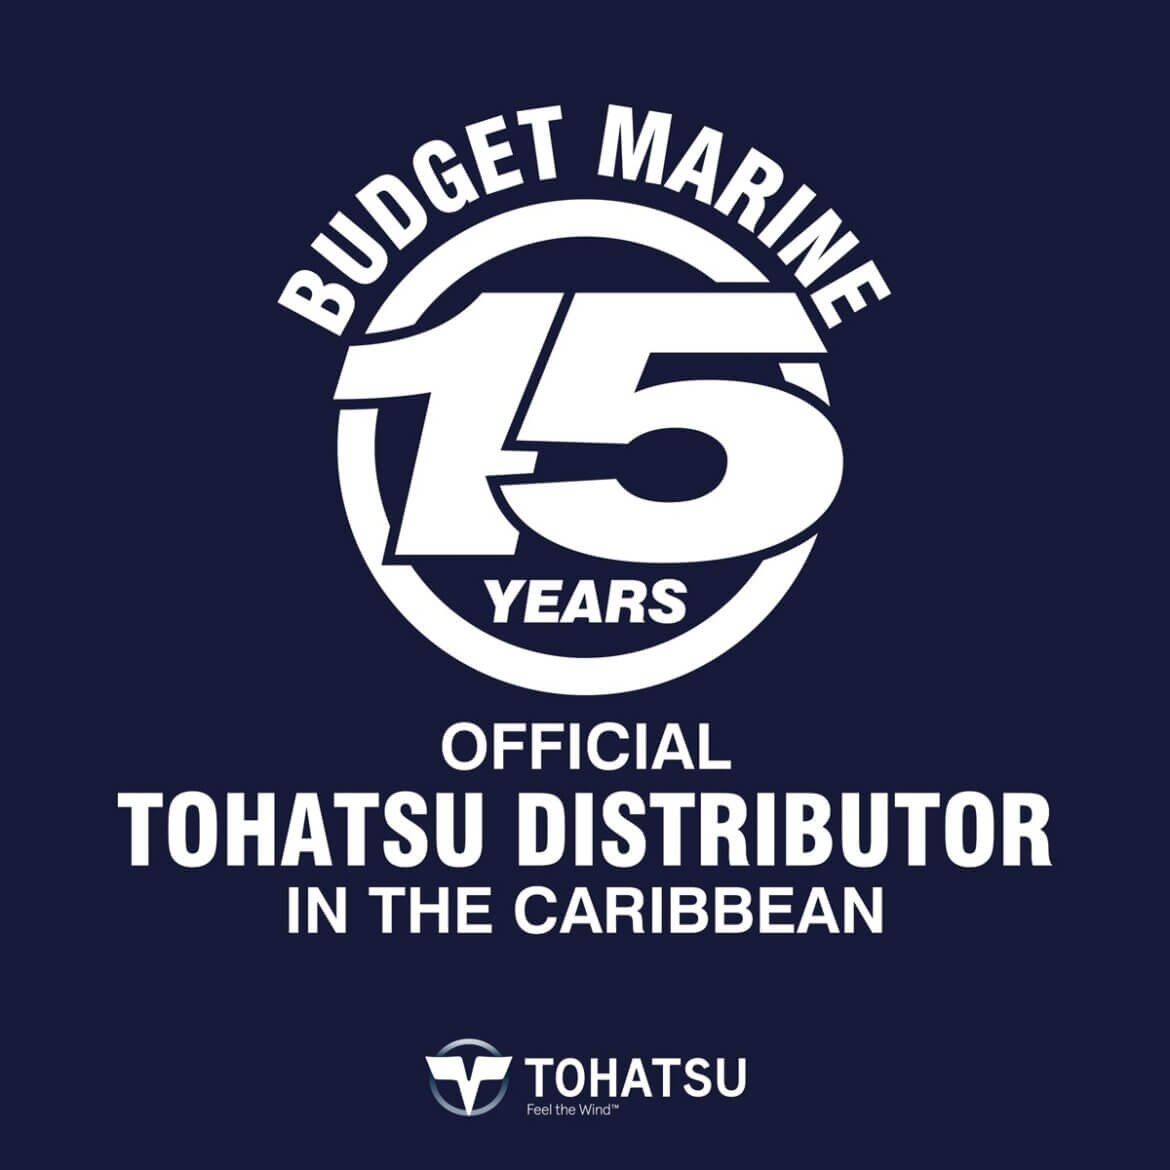 Budget Marine St. Thomas 10